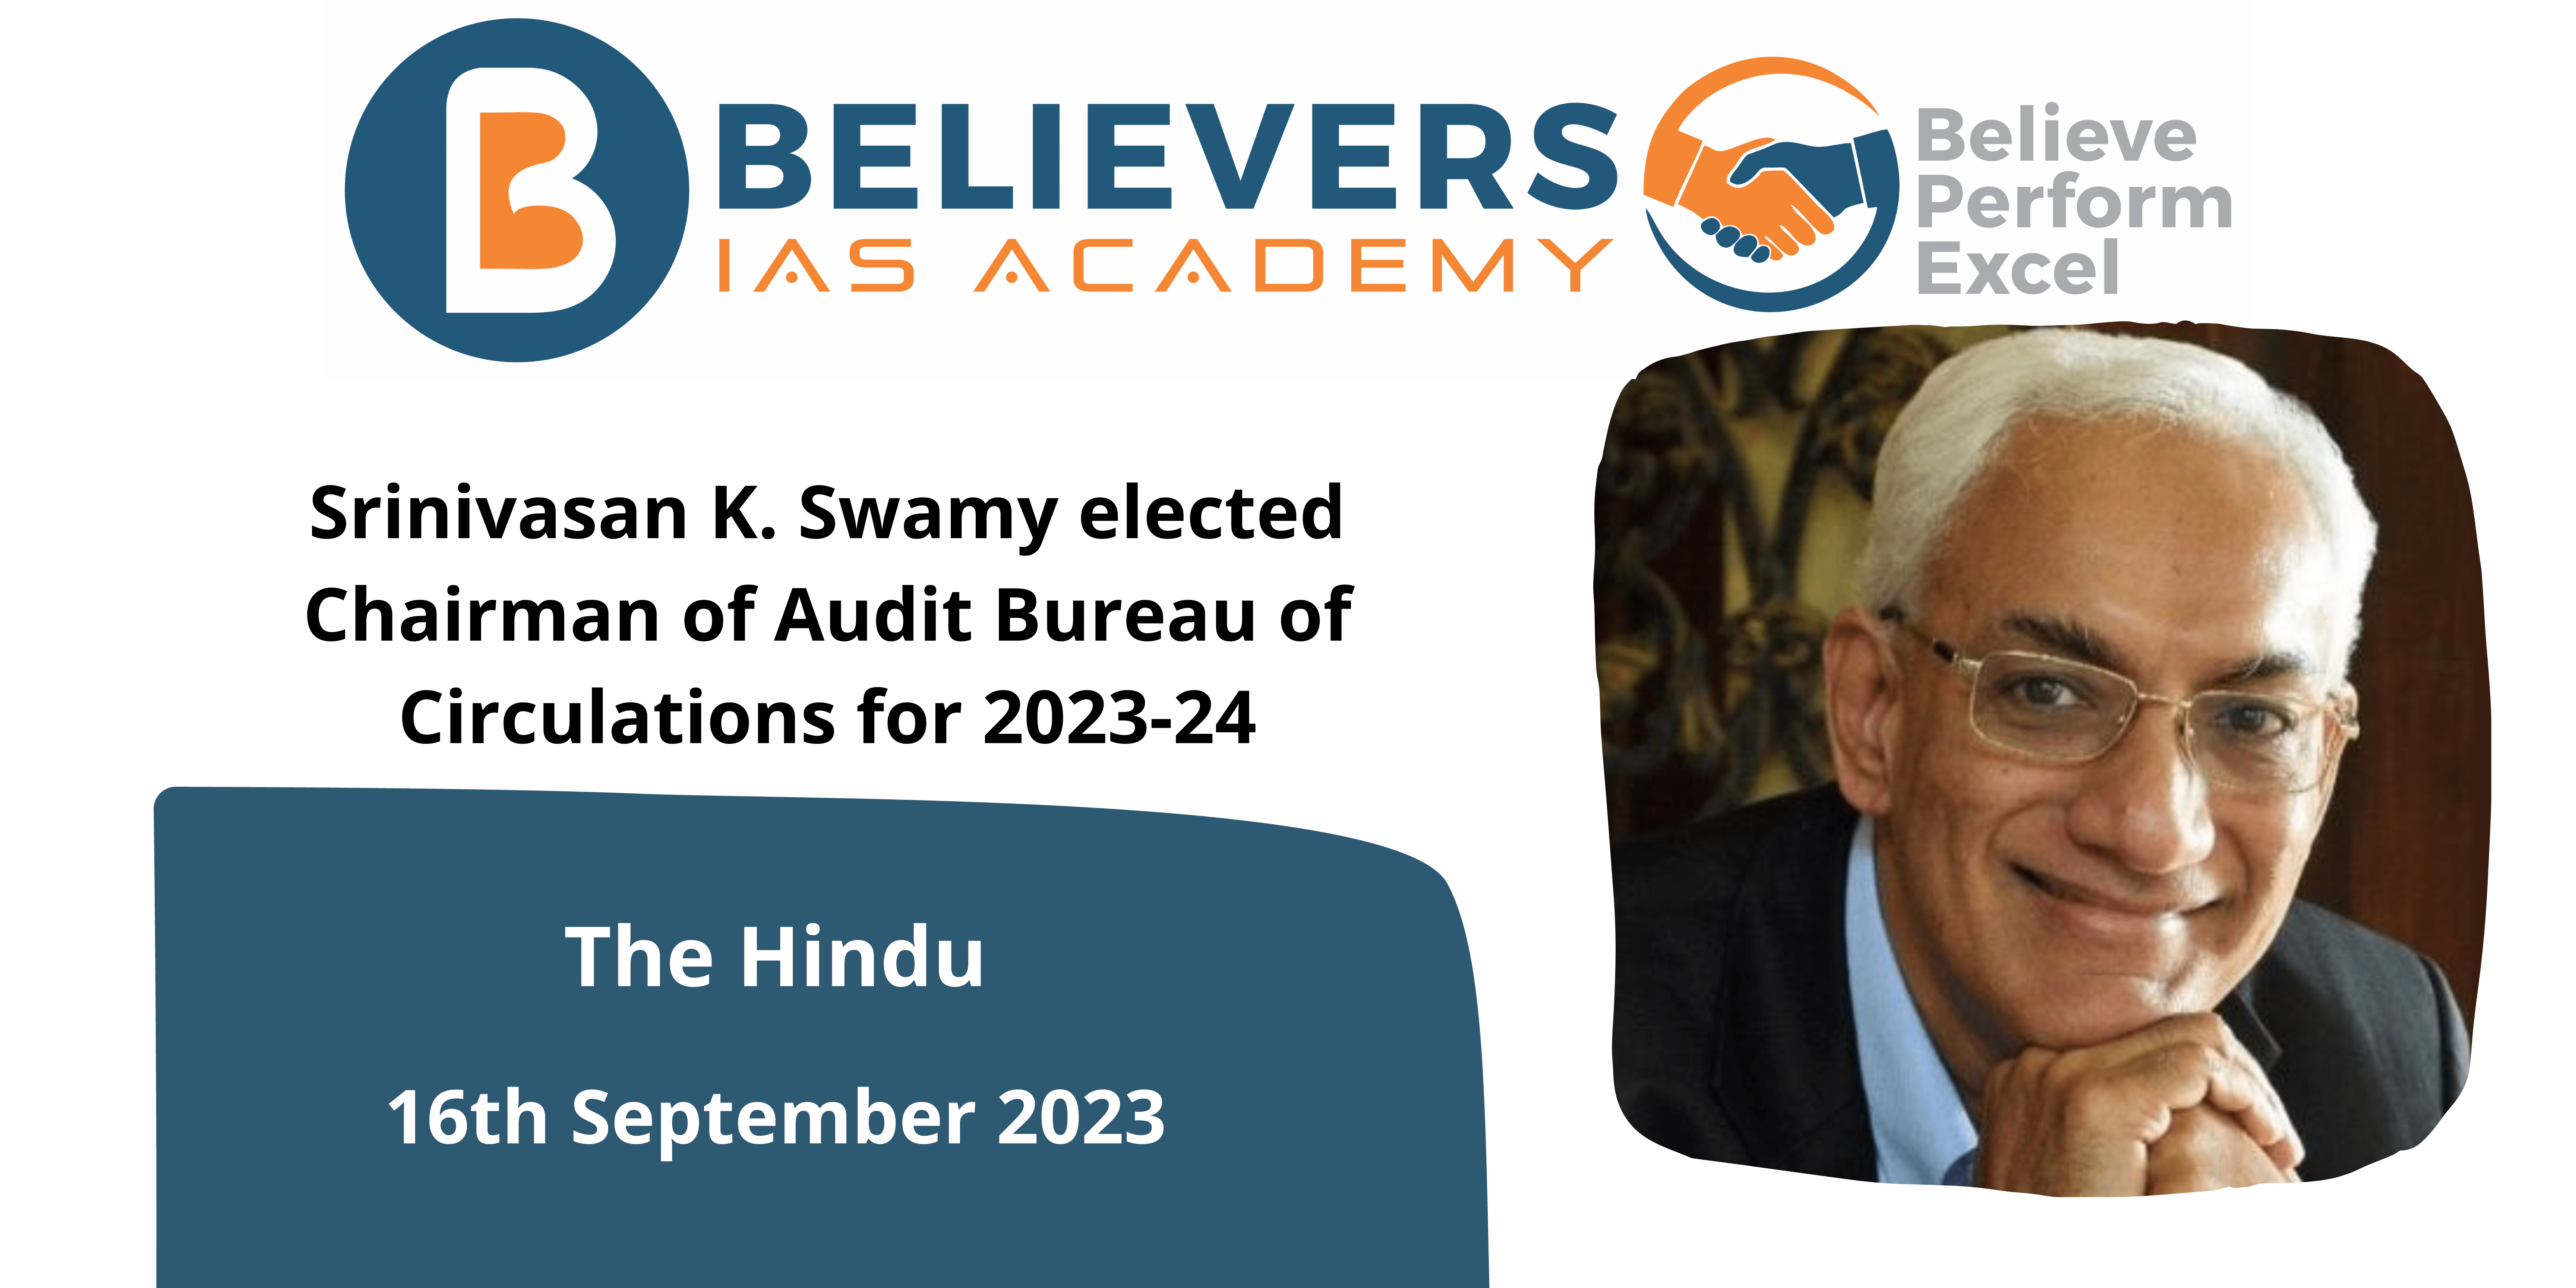 Srinivasan K. Swamy elected Chairman of Audit Bureau of Circulations for 2023-24